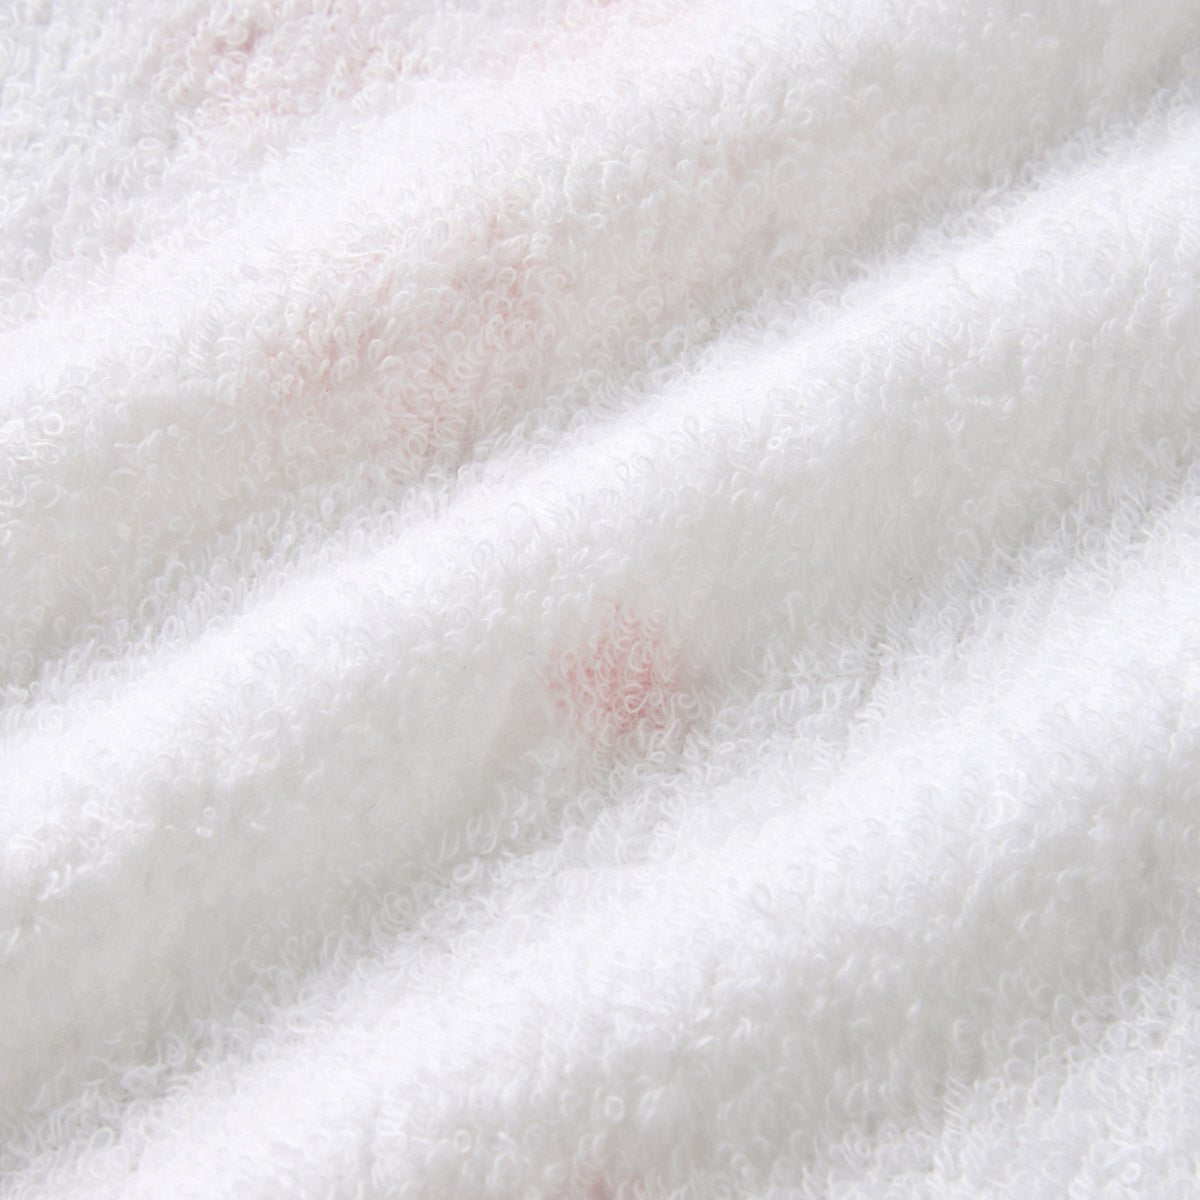 Gauze Pile Hybrid Bath Towel (UV Protection) - MIKI HOUSE USA